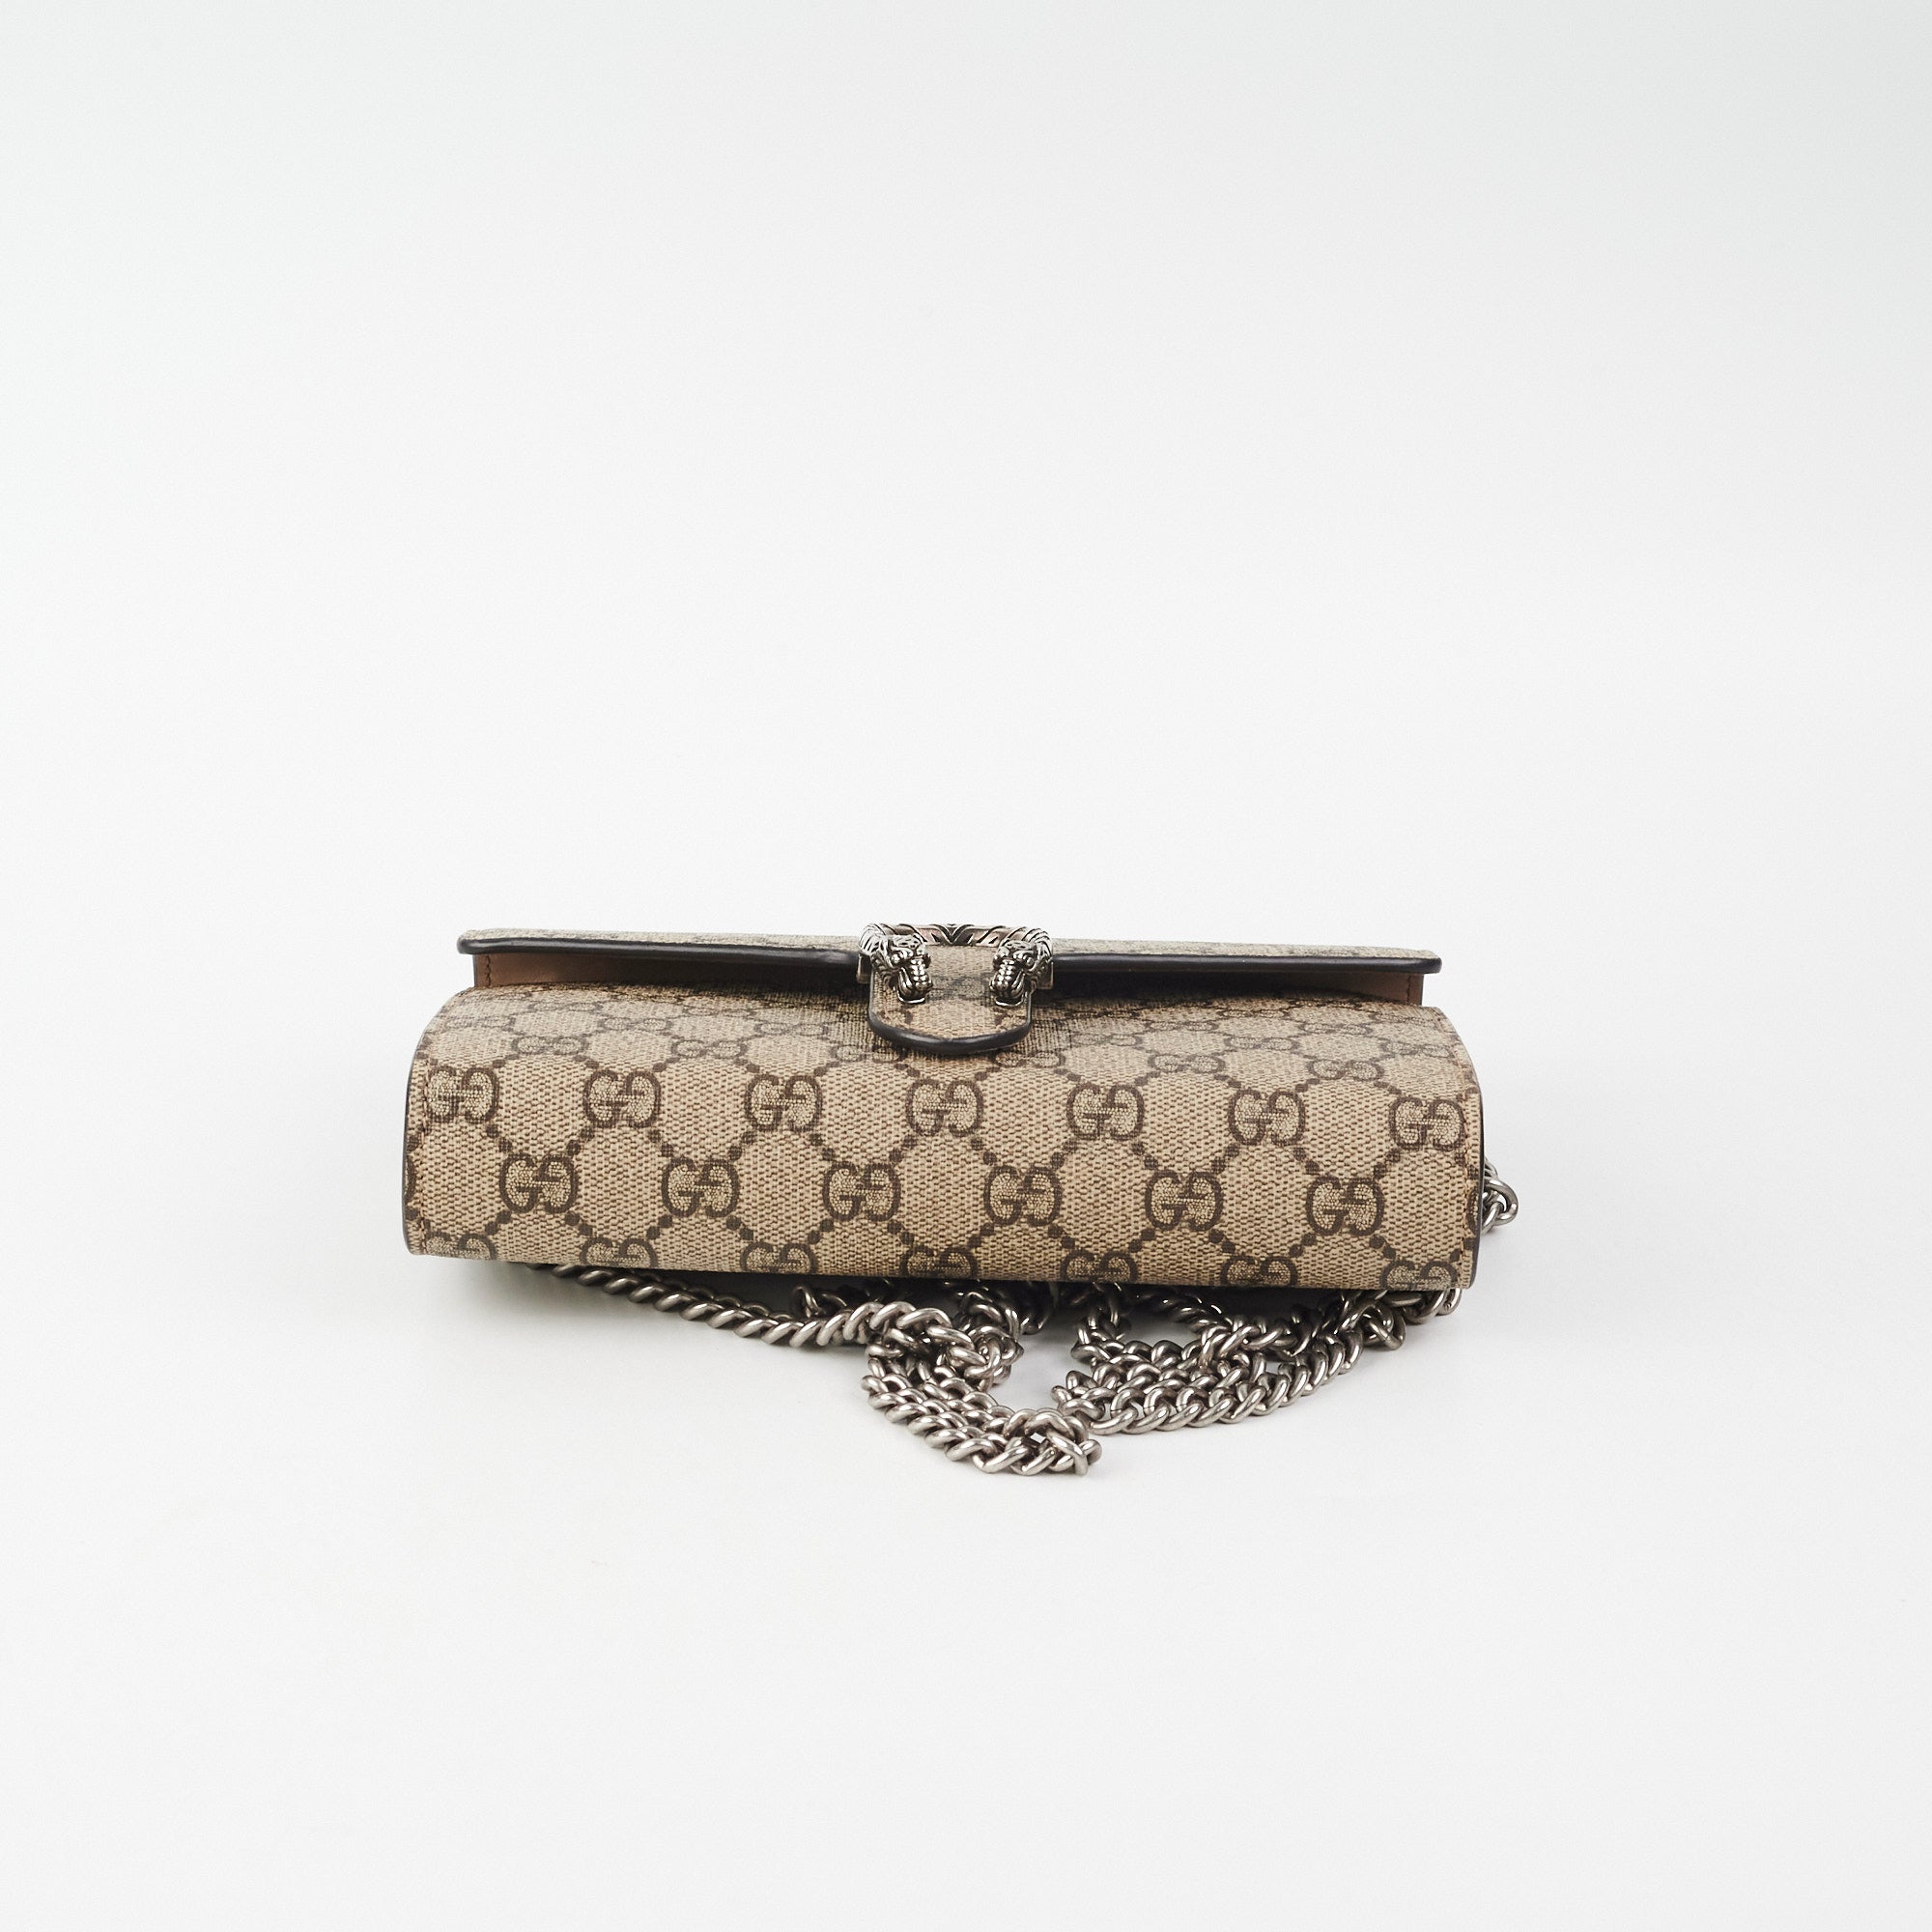 WIMB Gucci Dionysus WOC / Wallet on chain 